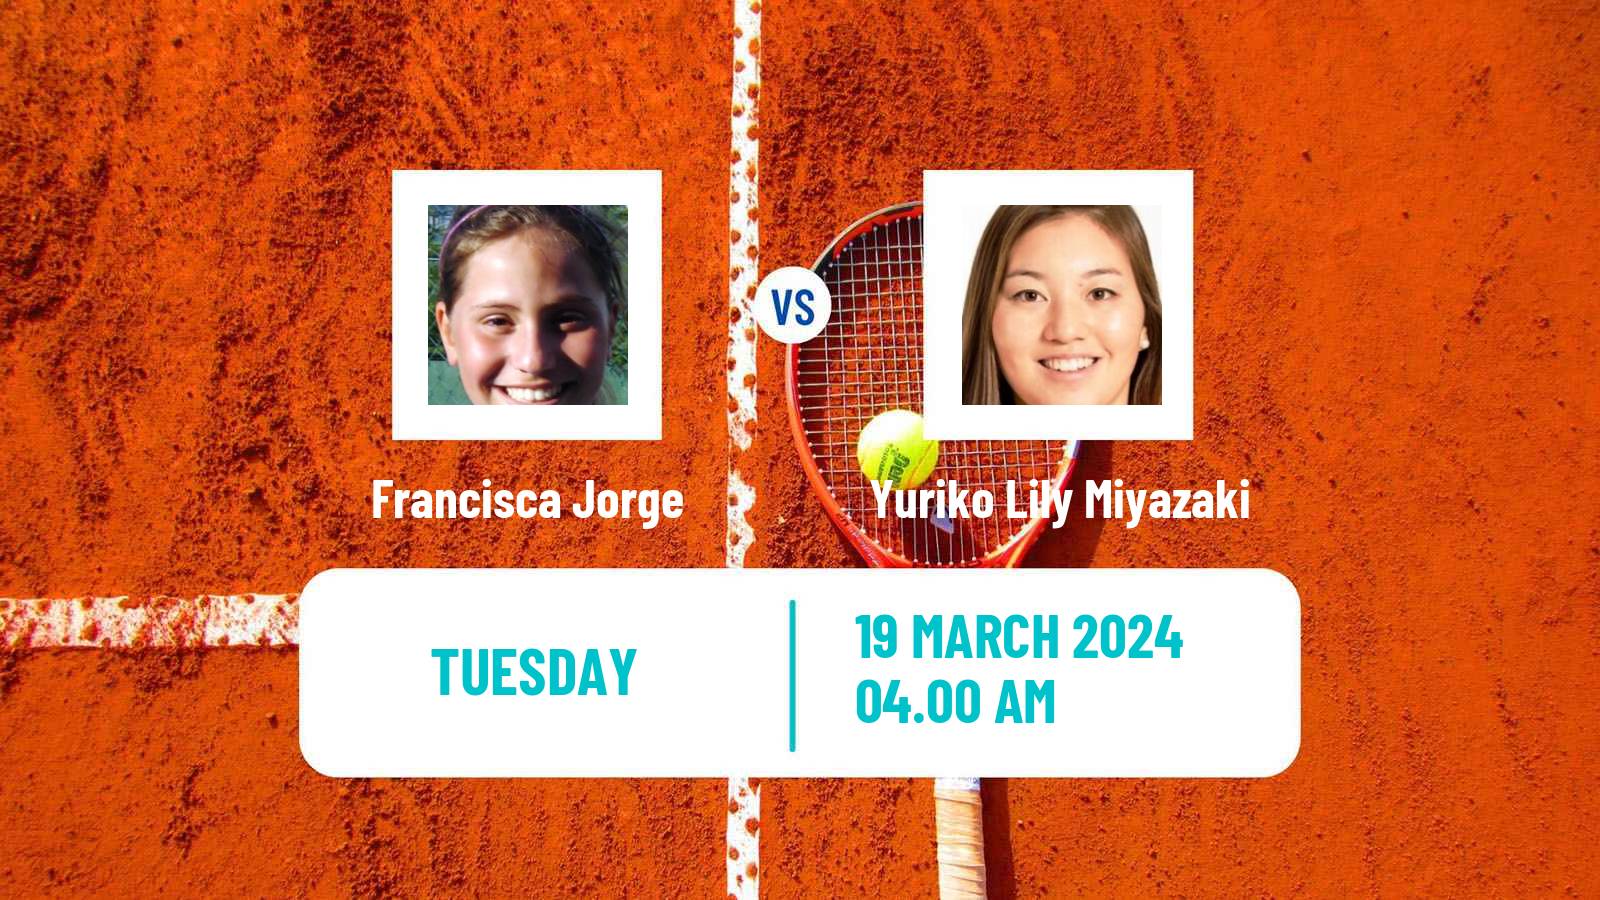 Tennis ITF W75 MarIBOr Women Francisca Jorge - Yuriko Lily Miyazaki